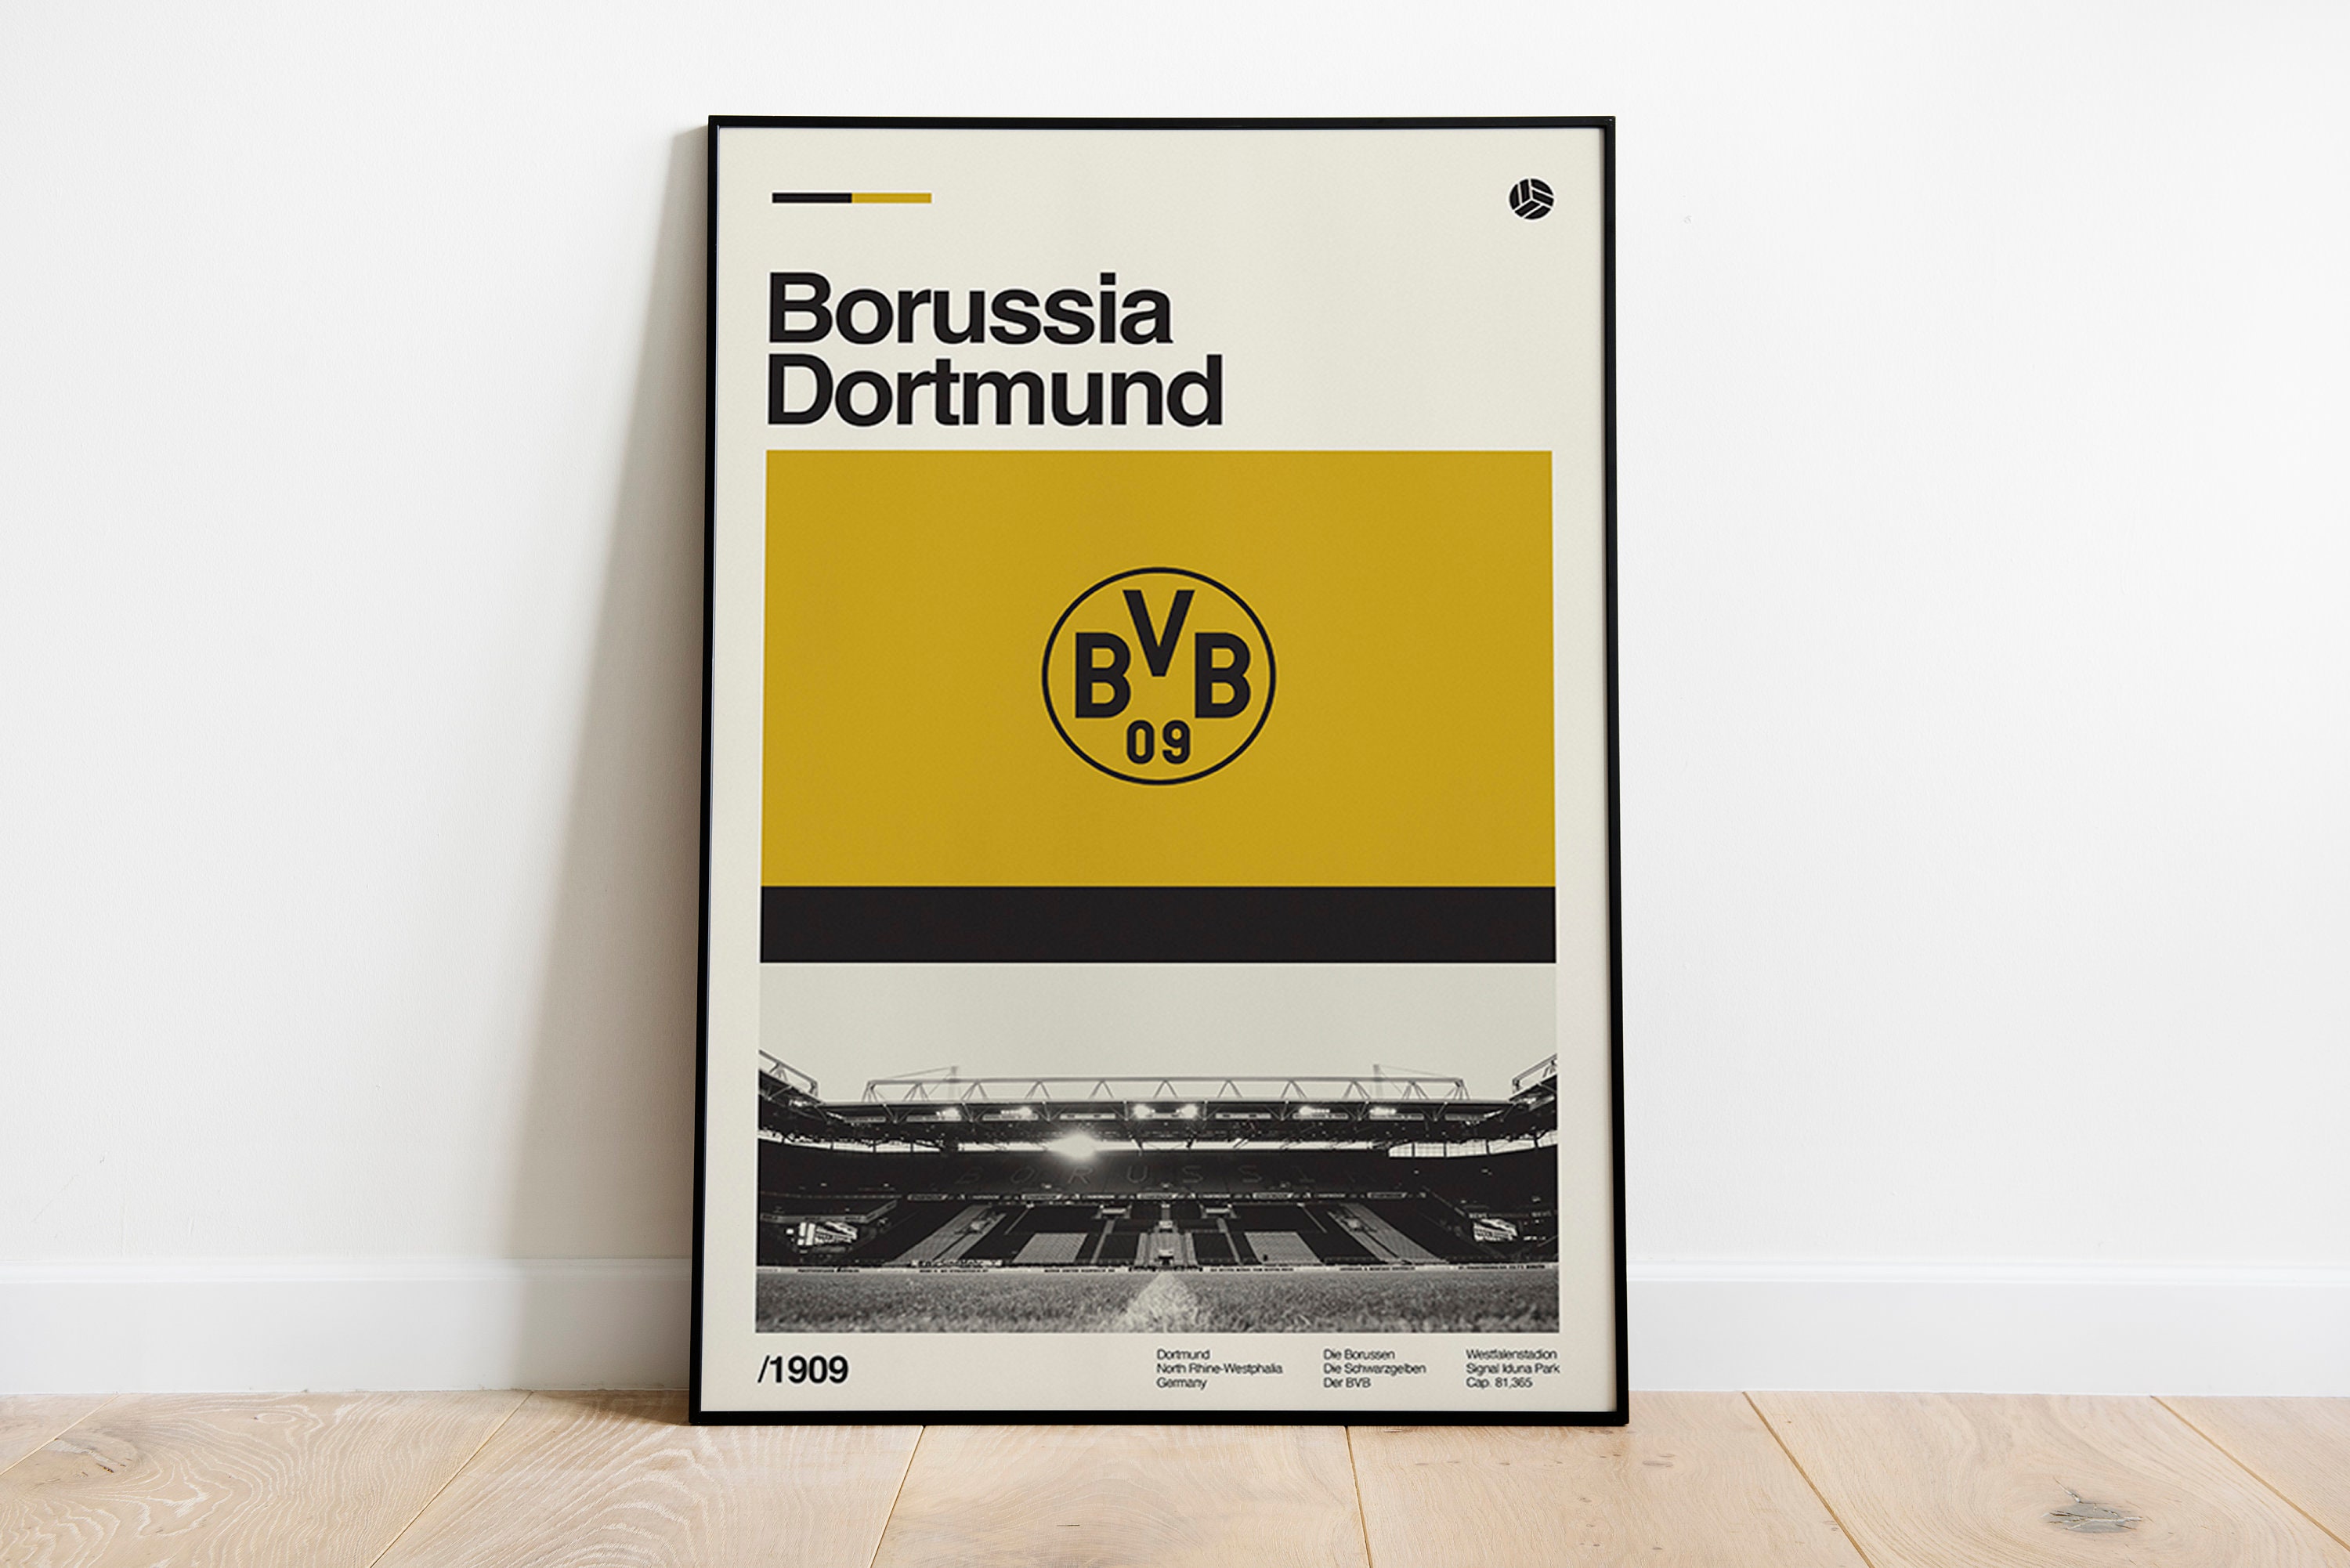 Dortmund Poster - Etsy | Wandtattoos